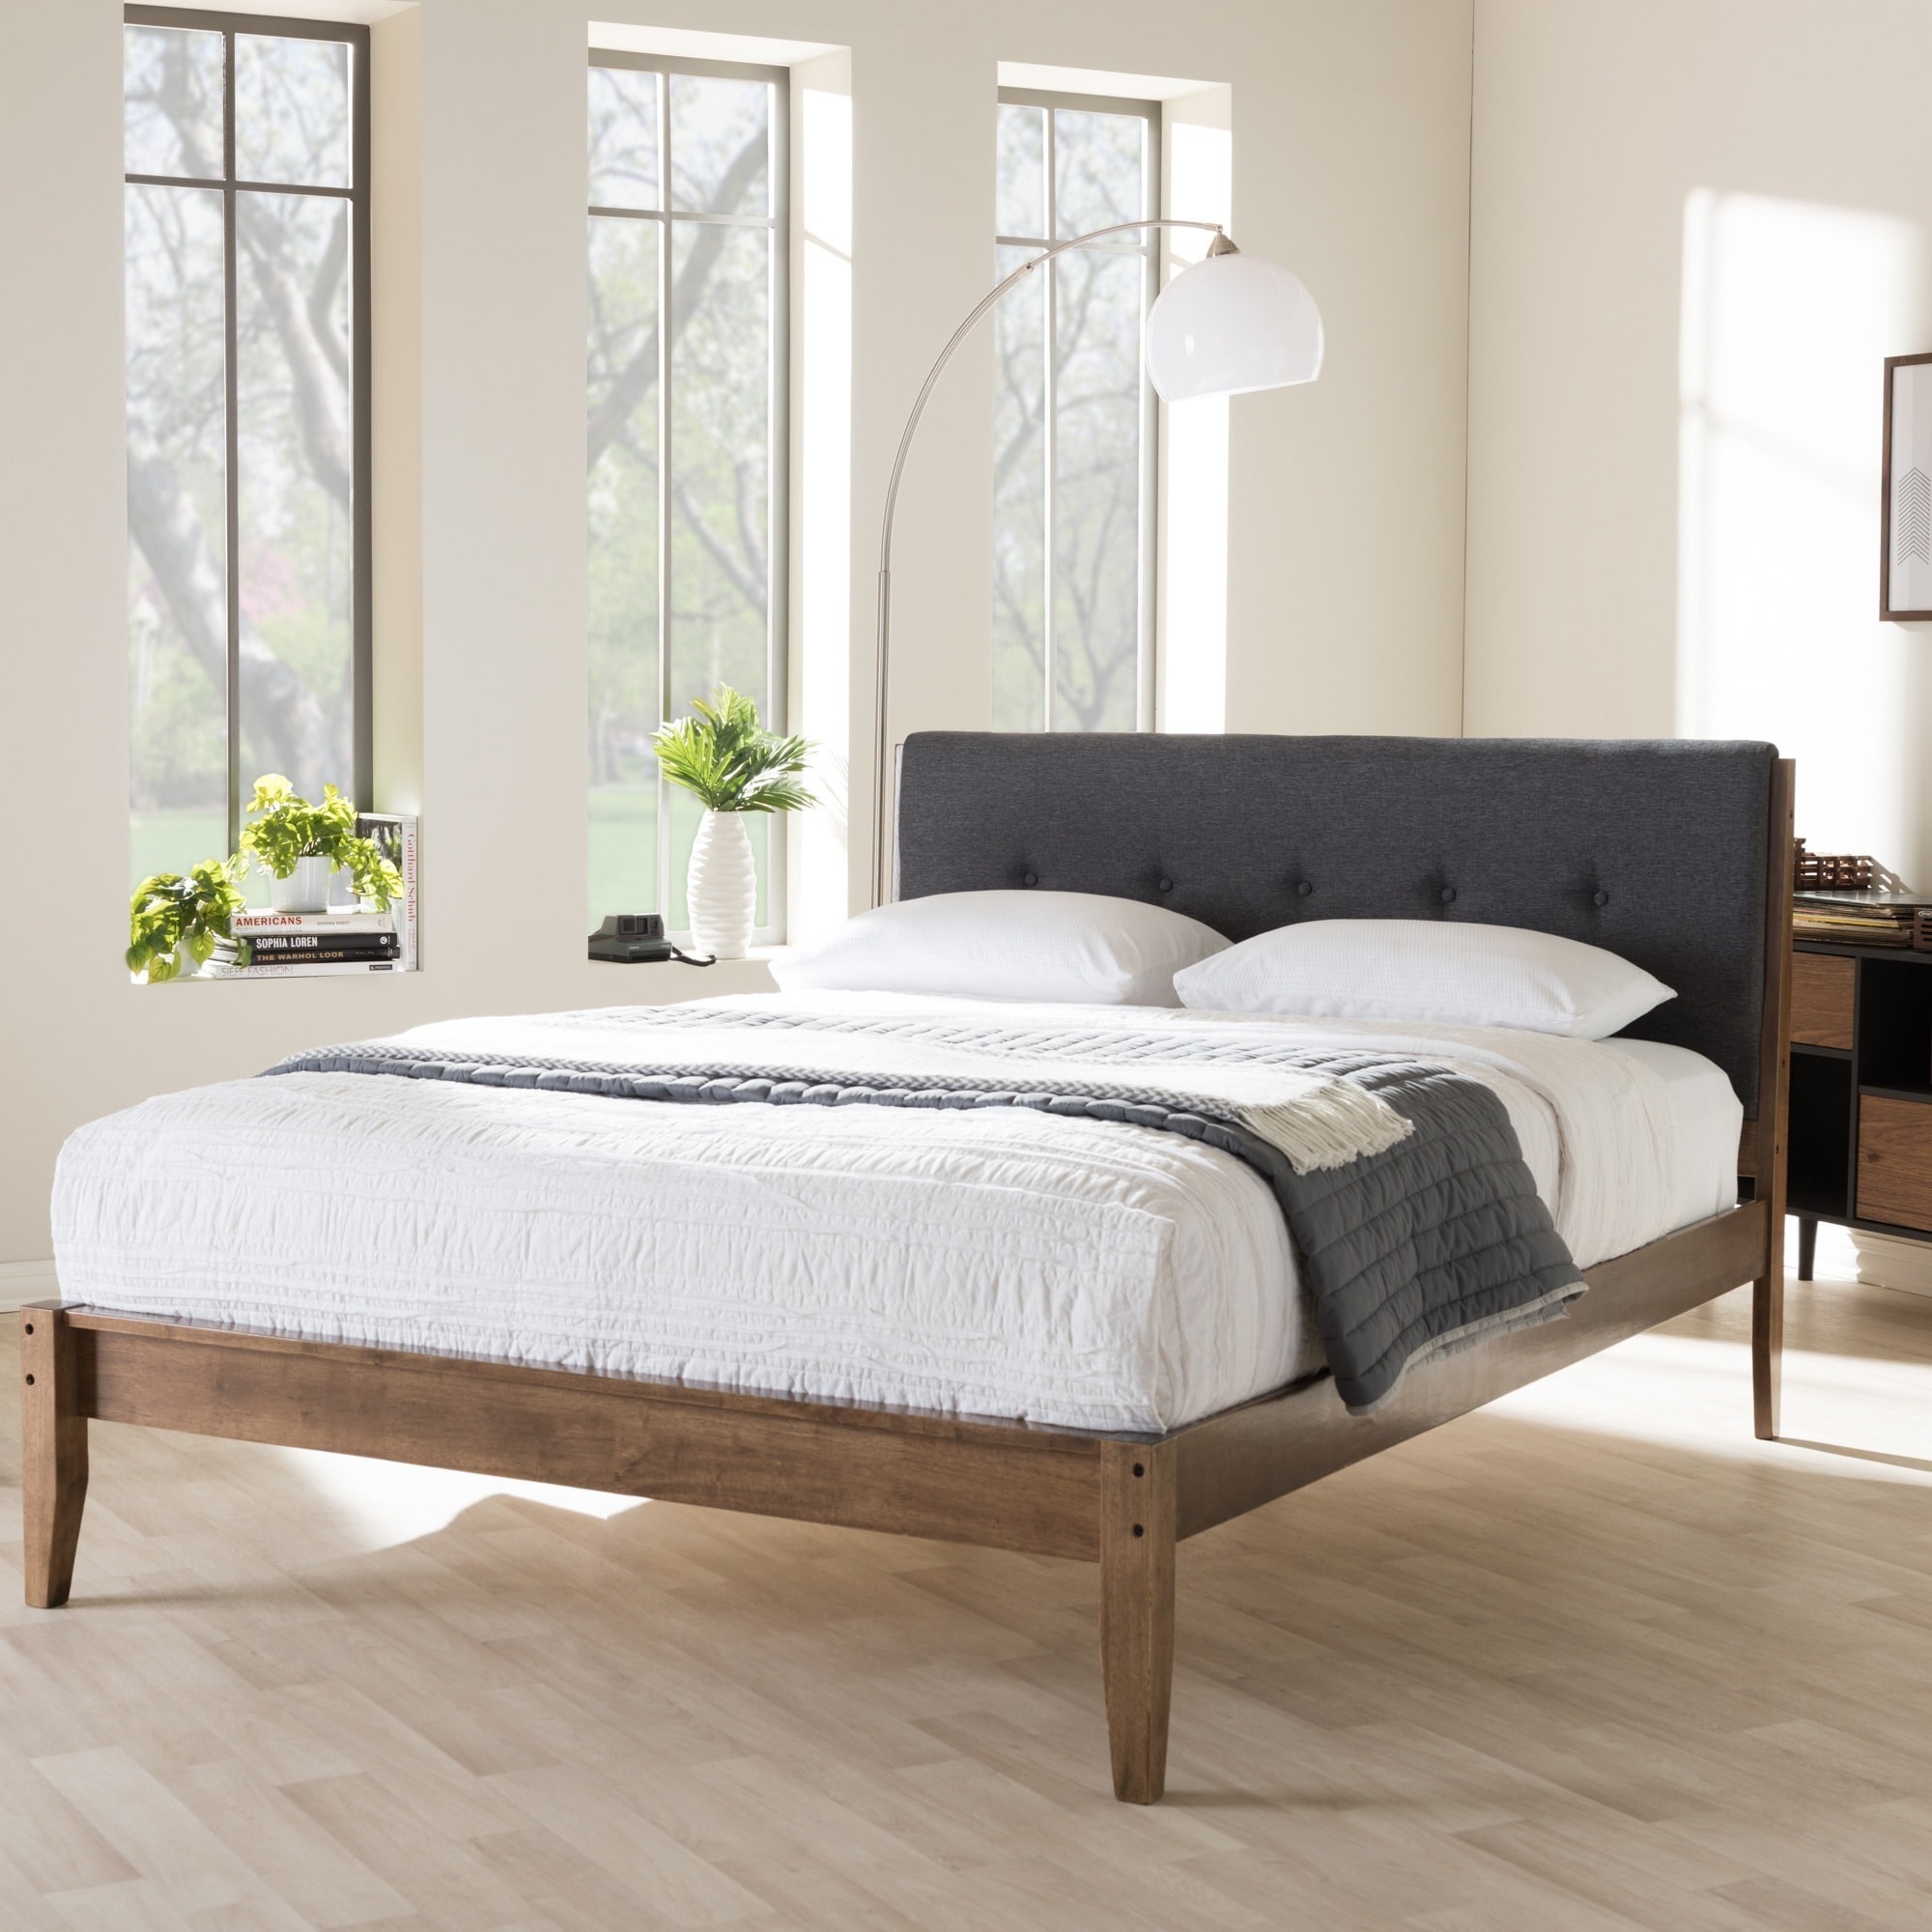 Featured image of post Grey Walnut Bedroom Furniture / Dressing room design ideas | modern dressing room for bedroom.